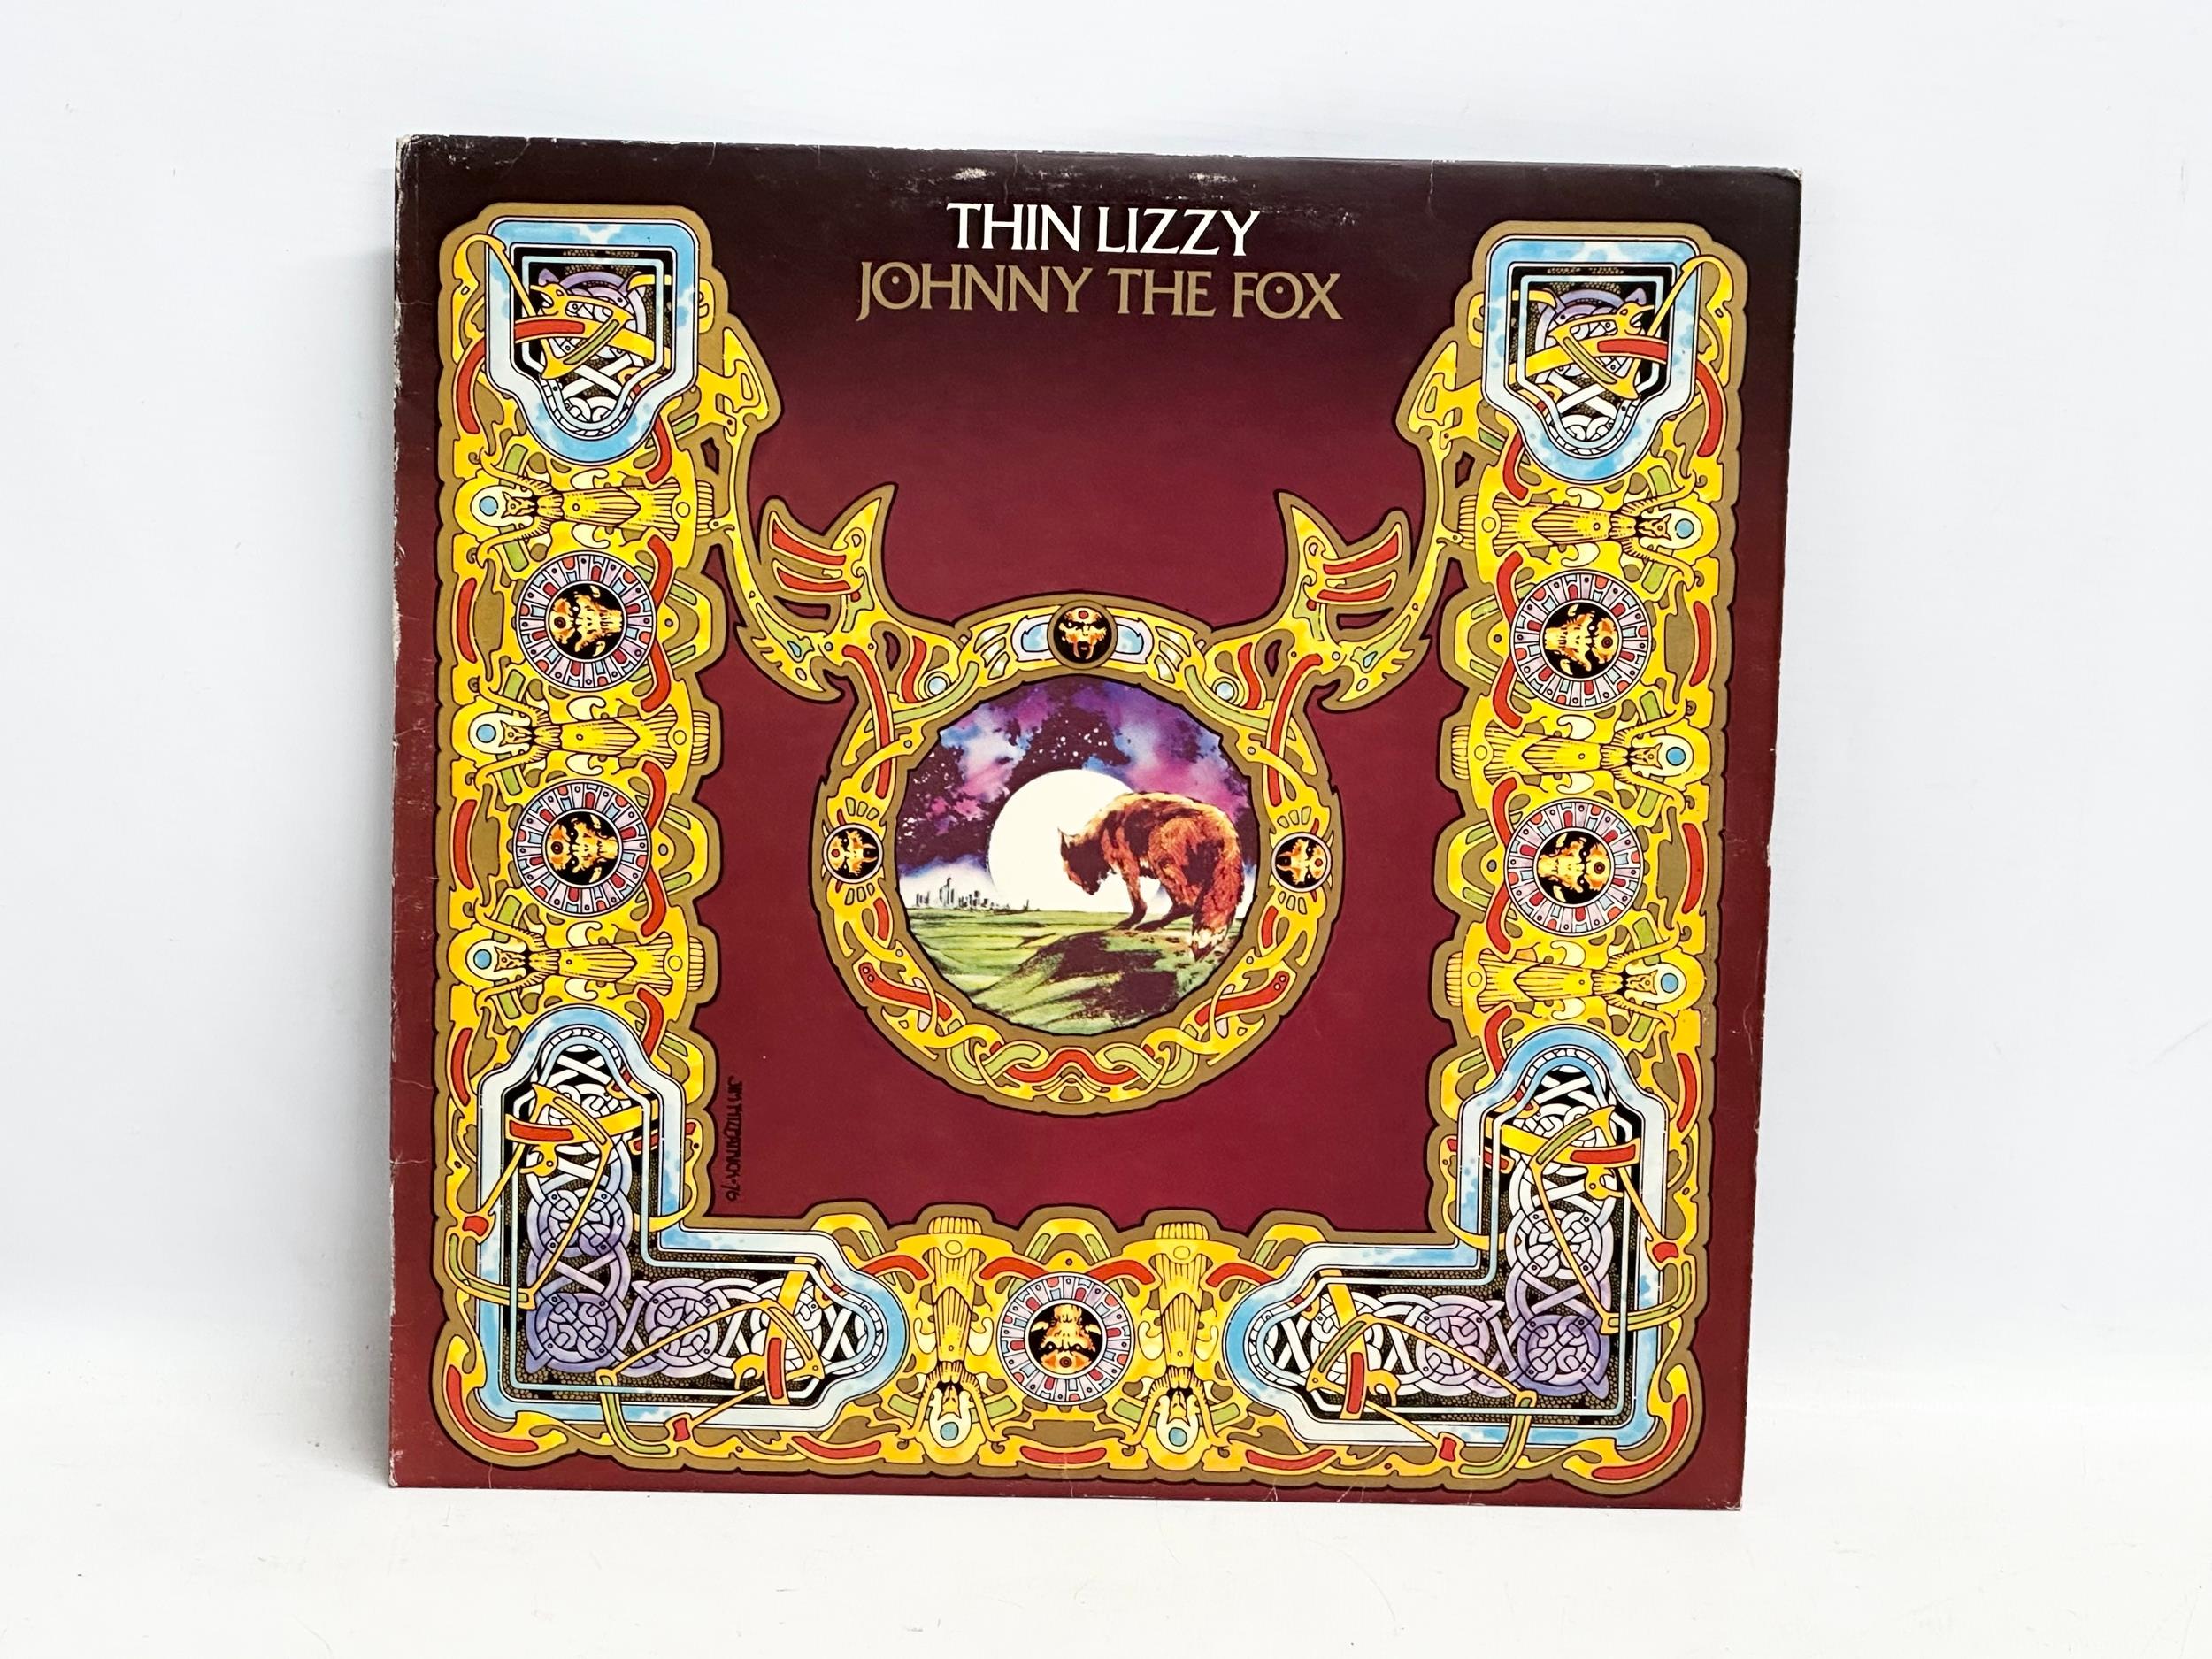 3 Thin Lizzy records. Thin Lizzy Johnny the Fox. Thin Lizzy Jailbreak. Thin Lizzy Nightlife. - Image 4 of 4